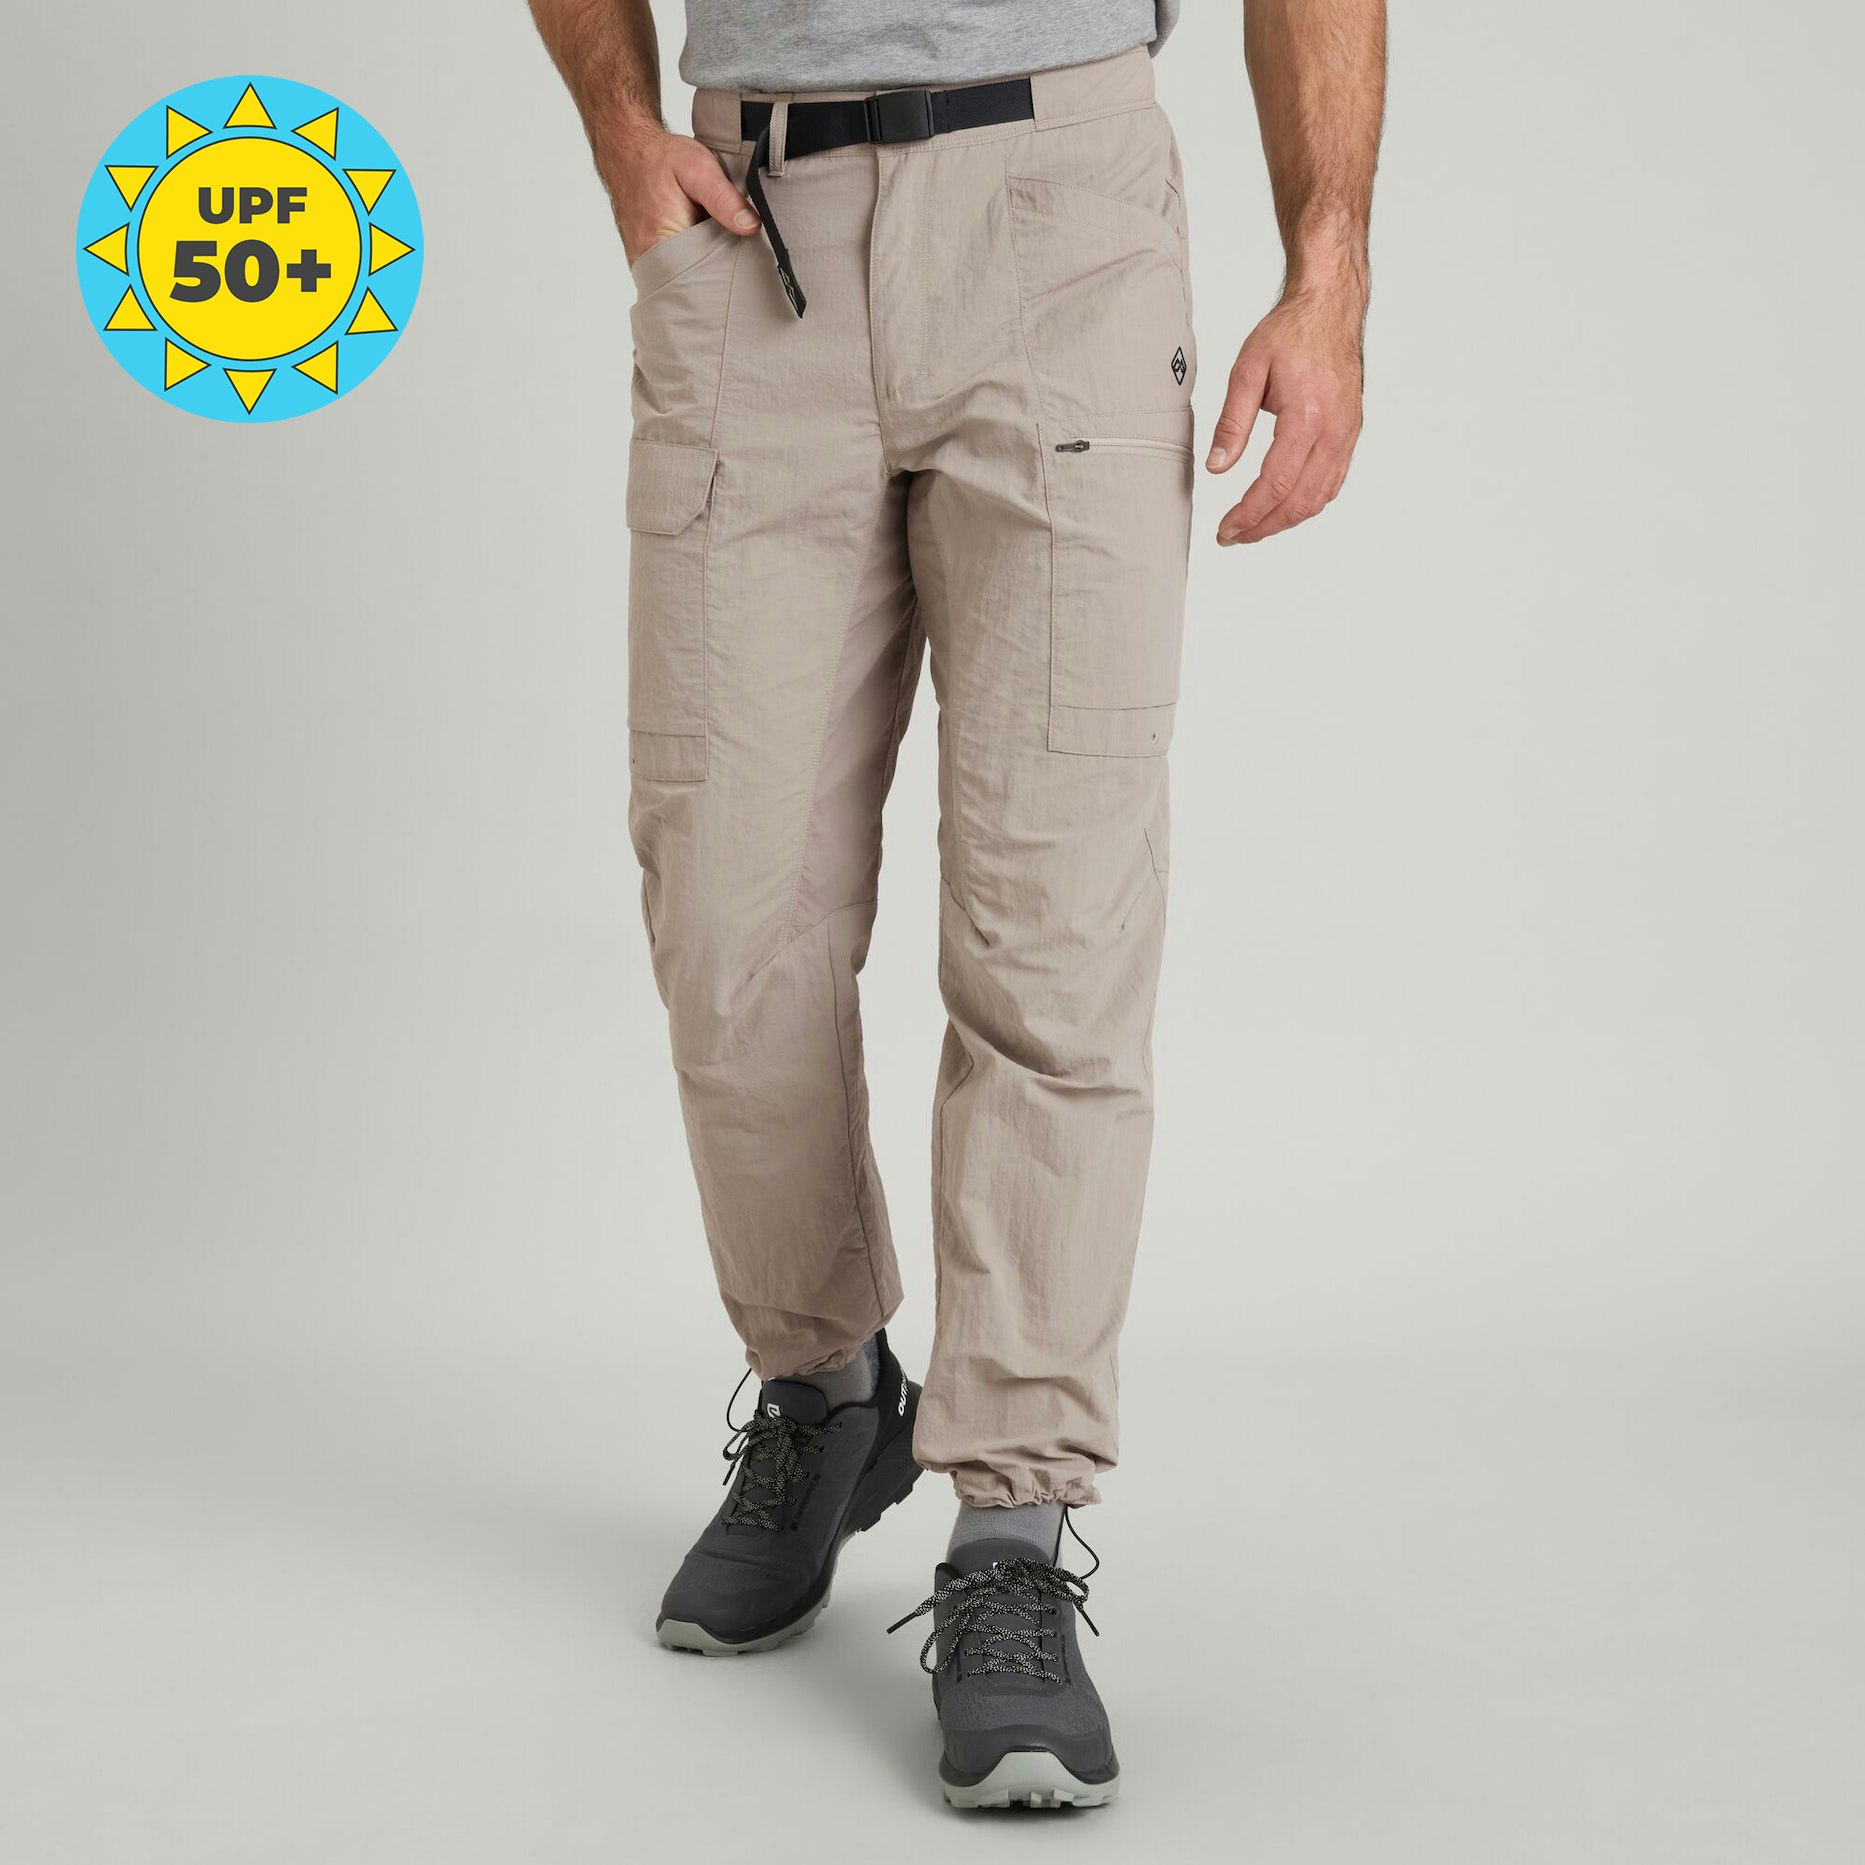 Kathmandu Flight Pants V3 - Walking trousers Women's | Buy online |  Bergfreunde.eu